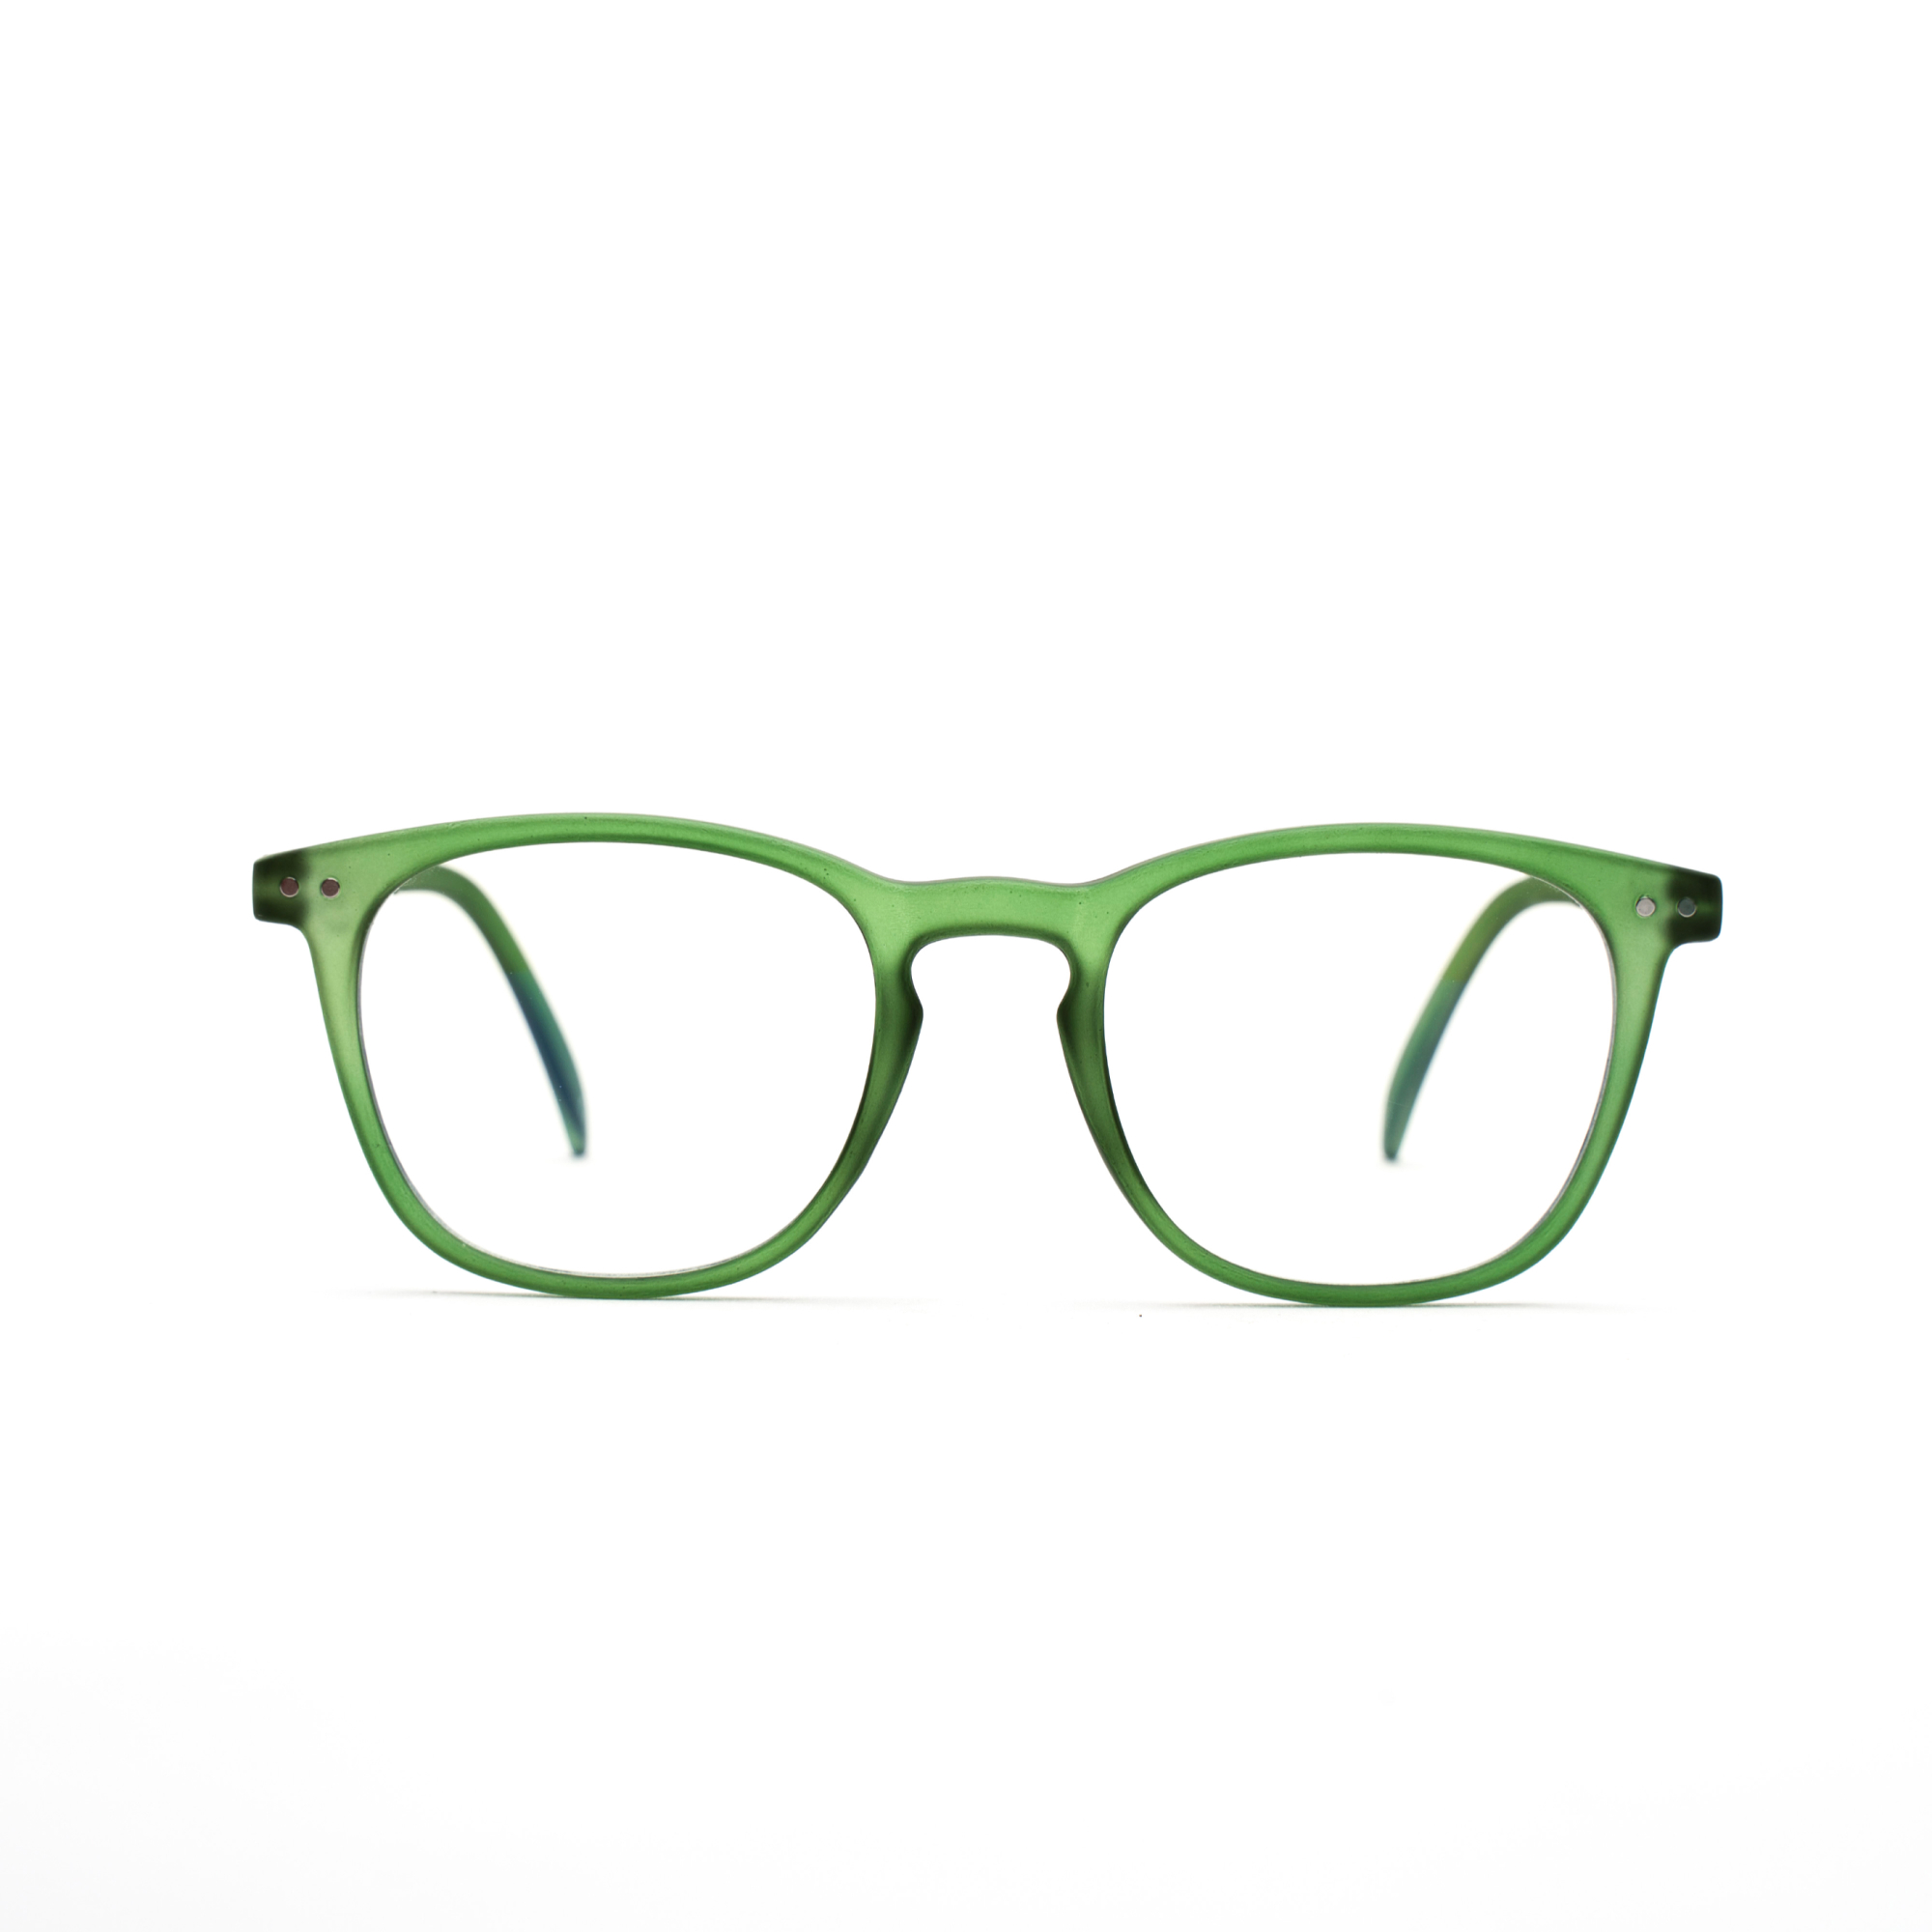 Men's blue light reading glasses – William BlueVision m - Green